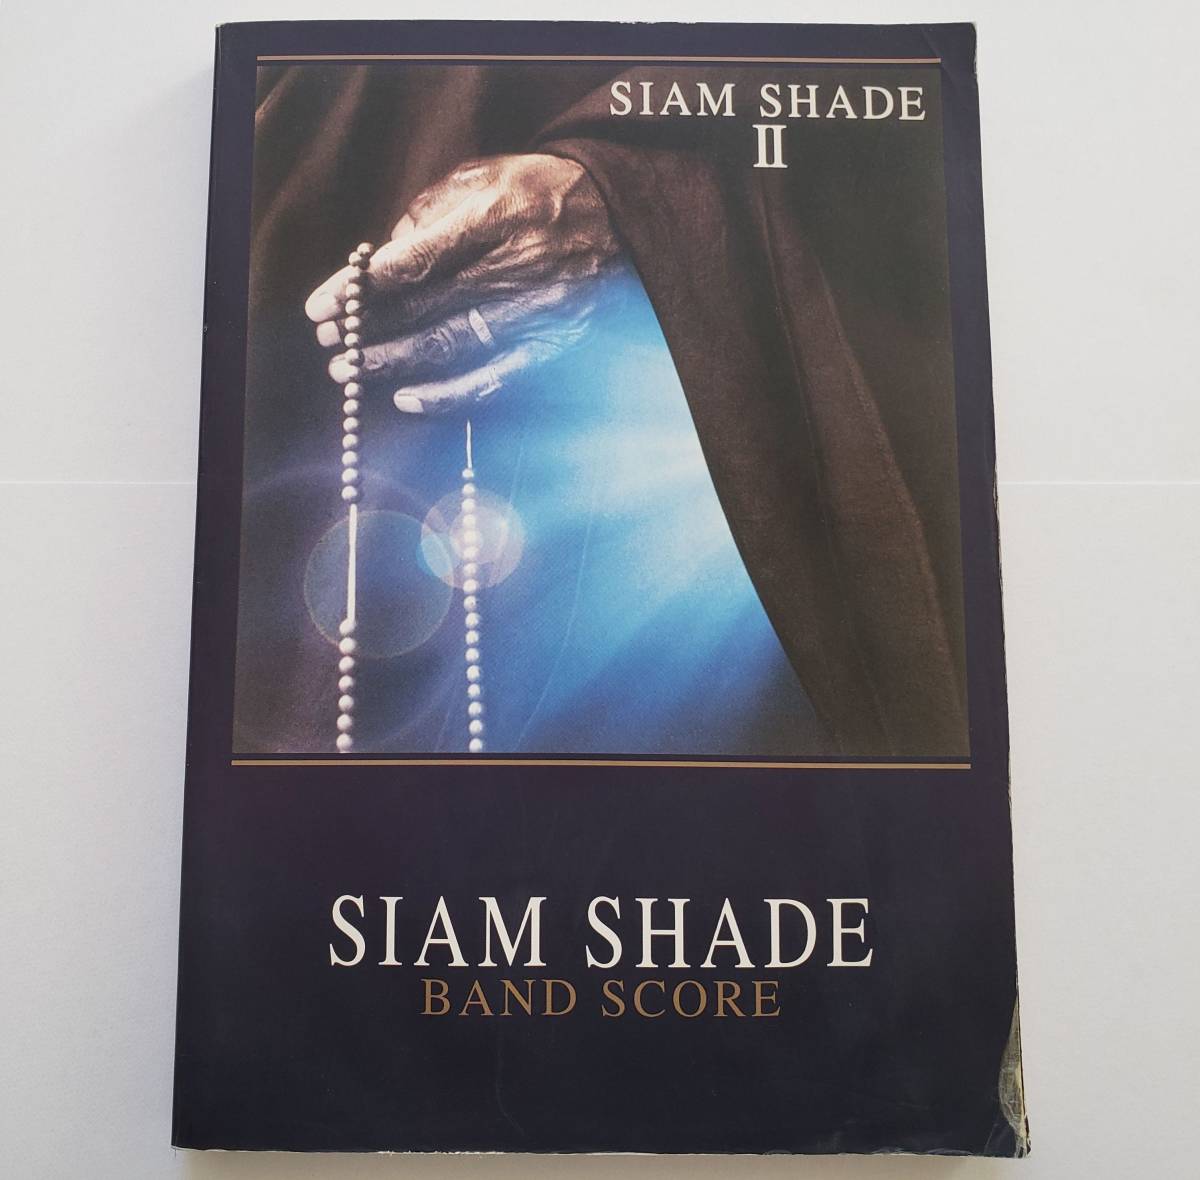 SIAM SHADE II シャムシェイド 2 DAITA ダイタ BAND SCORE 楽譜 バンドスコア 楽曲解説 インタビュー ギター ベース タブ譜 TAB譜 スコア_画像1